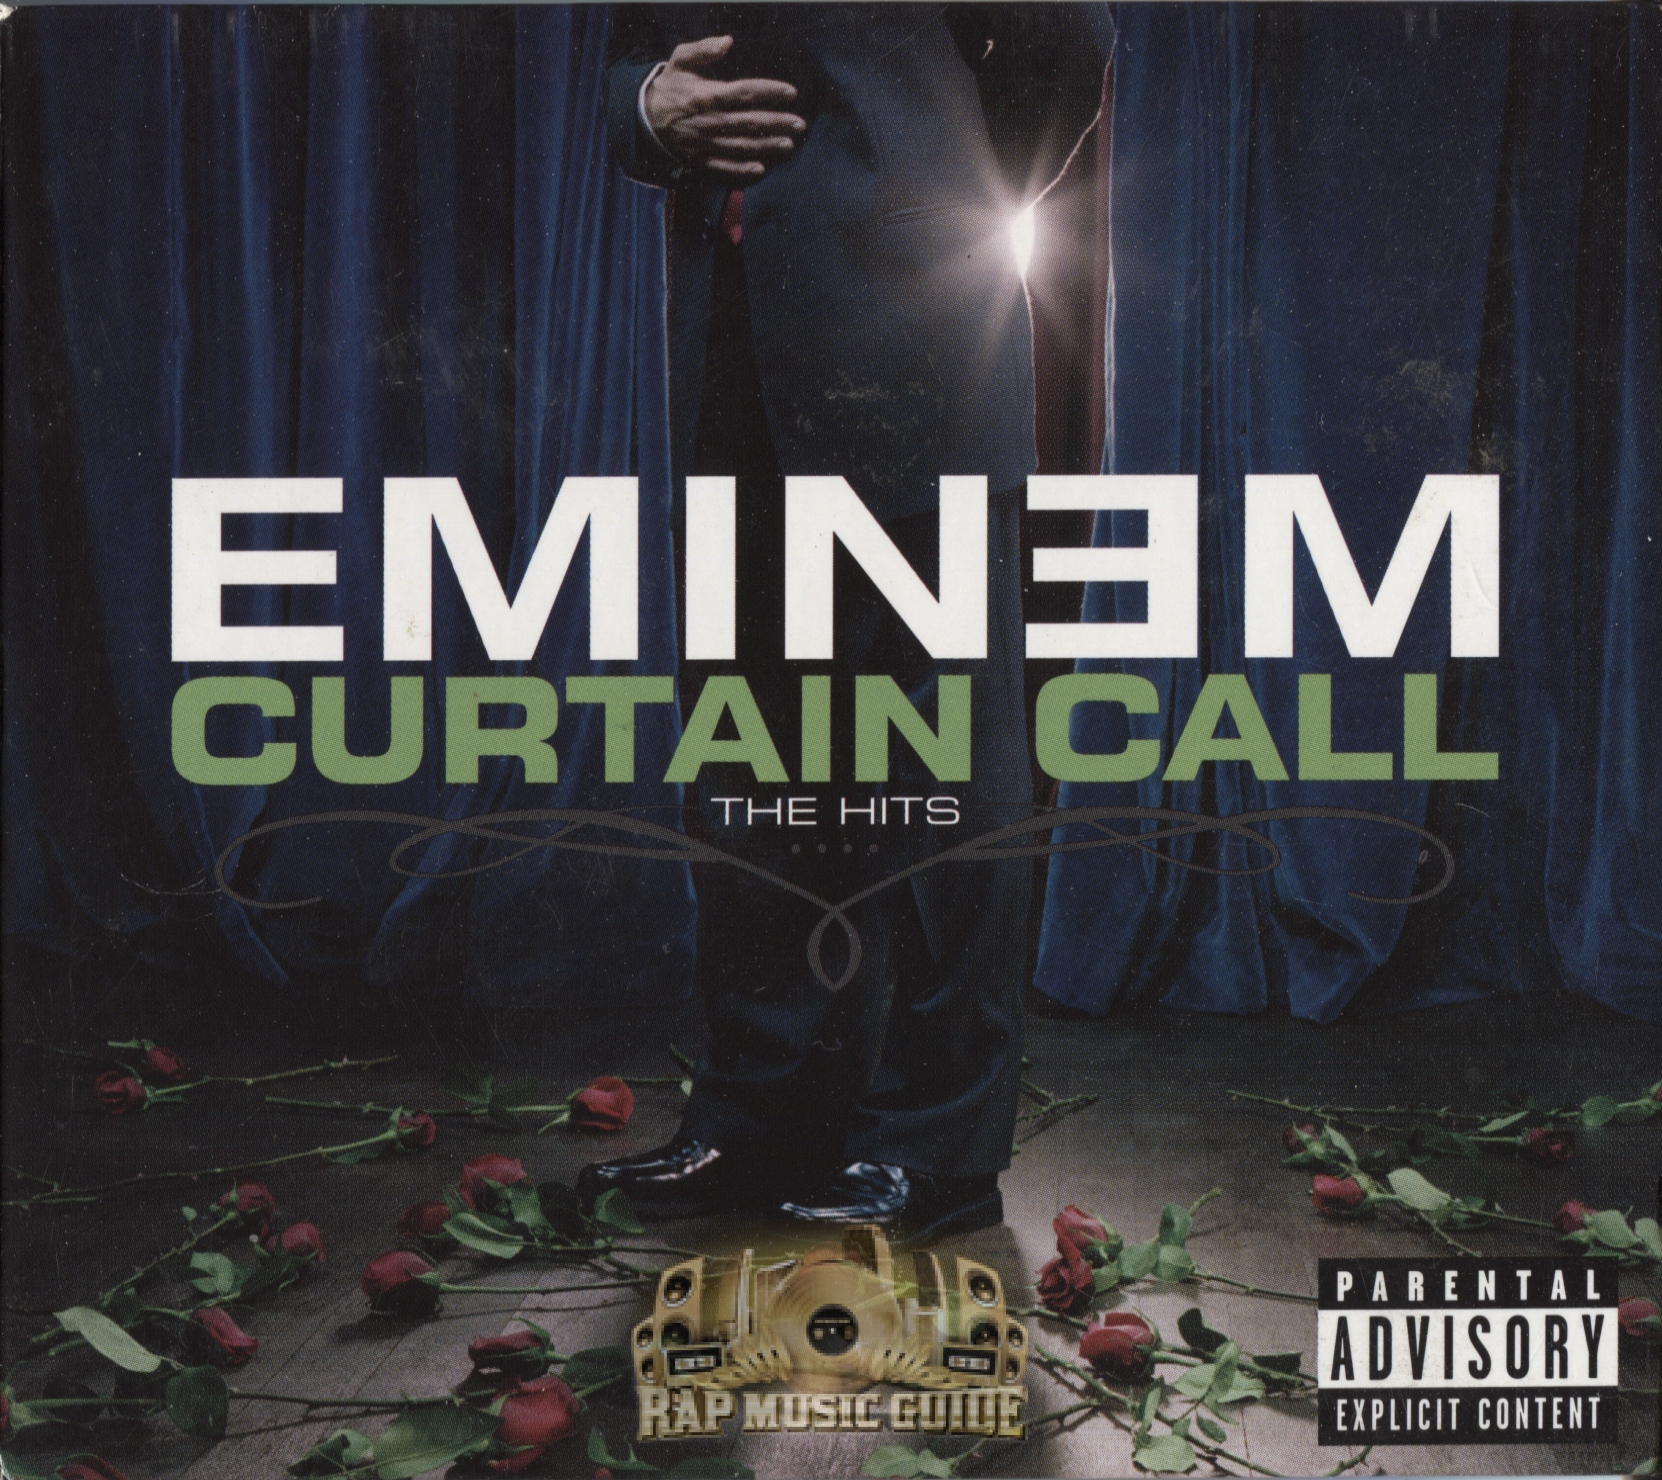 Eminem curtain call. Eminem. Curtain Call. The Hits. 2005. Eminem album 2022 Curtain Call 2. Альбомы Эминема обложки Curtain Call. Curtain Call Эминем.